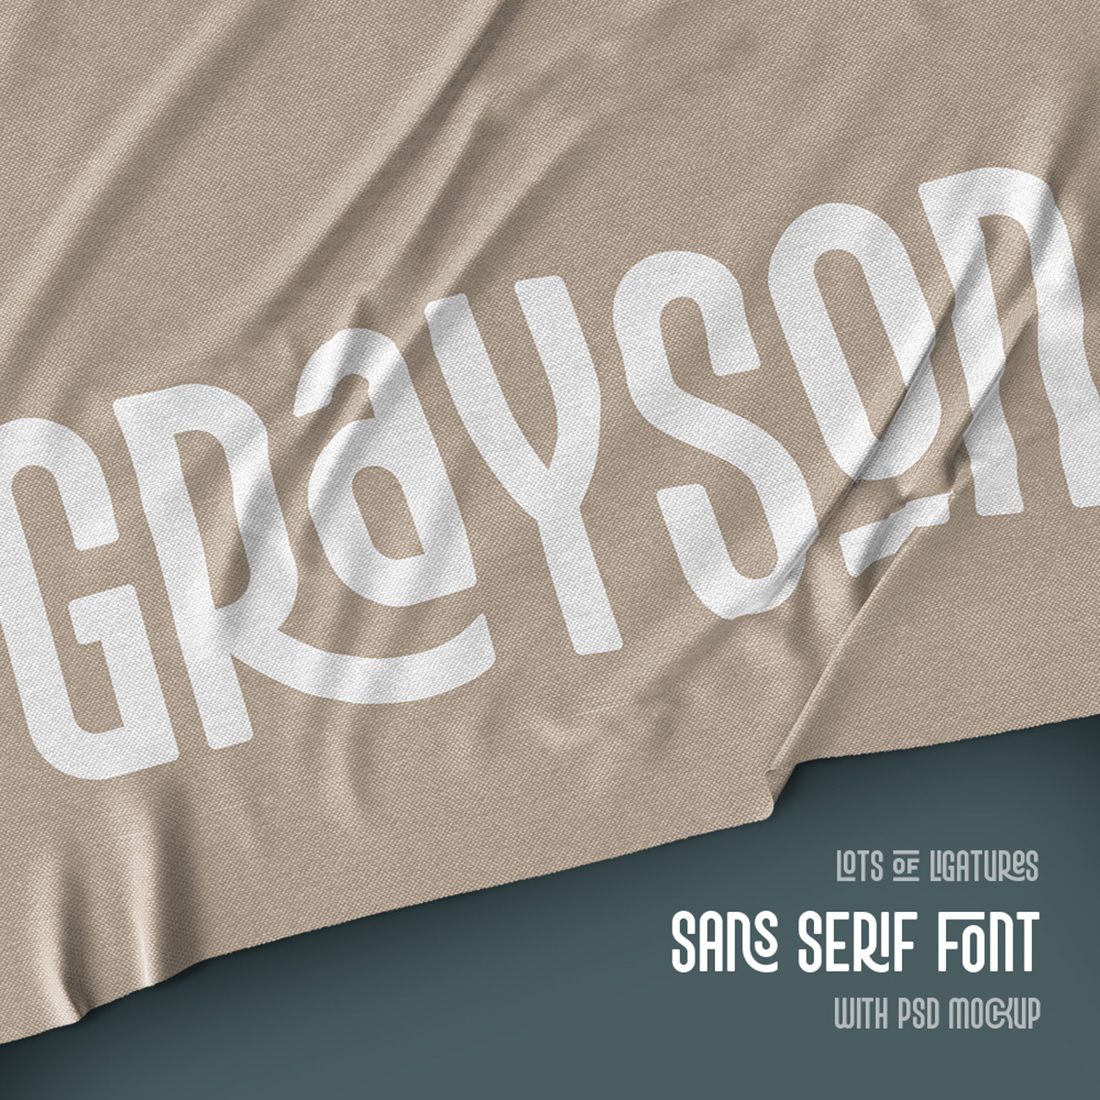 Grayson Font & Mockup cover image.